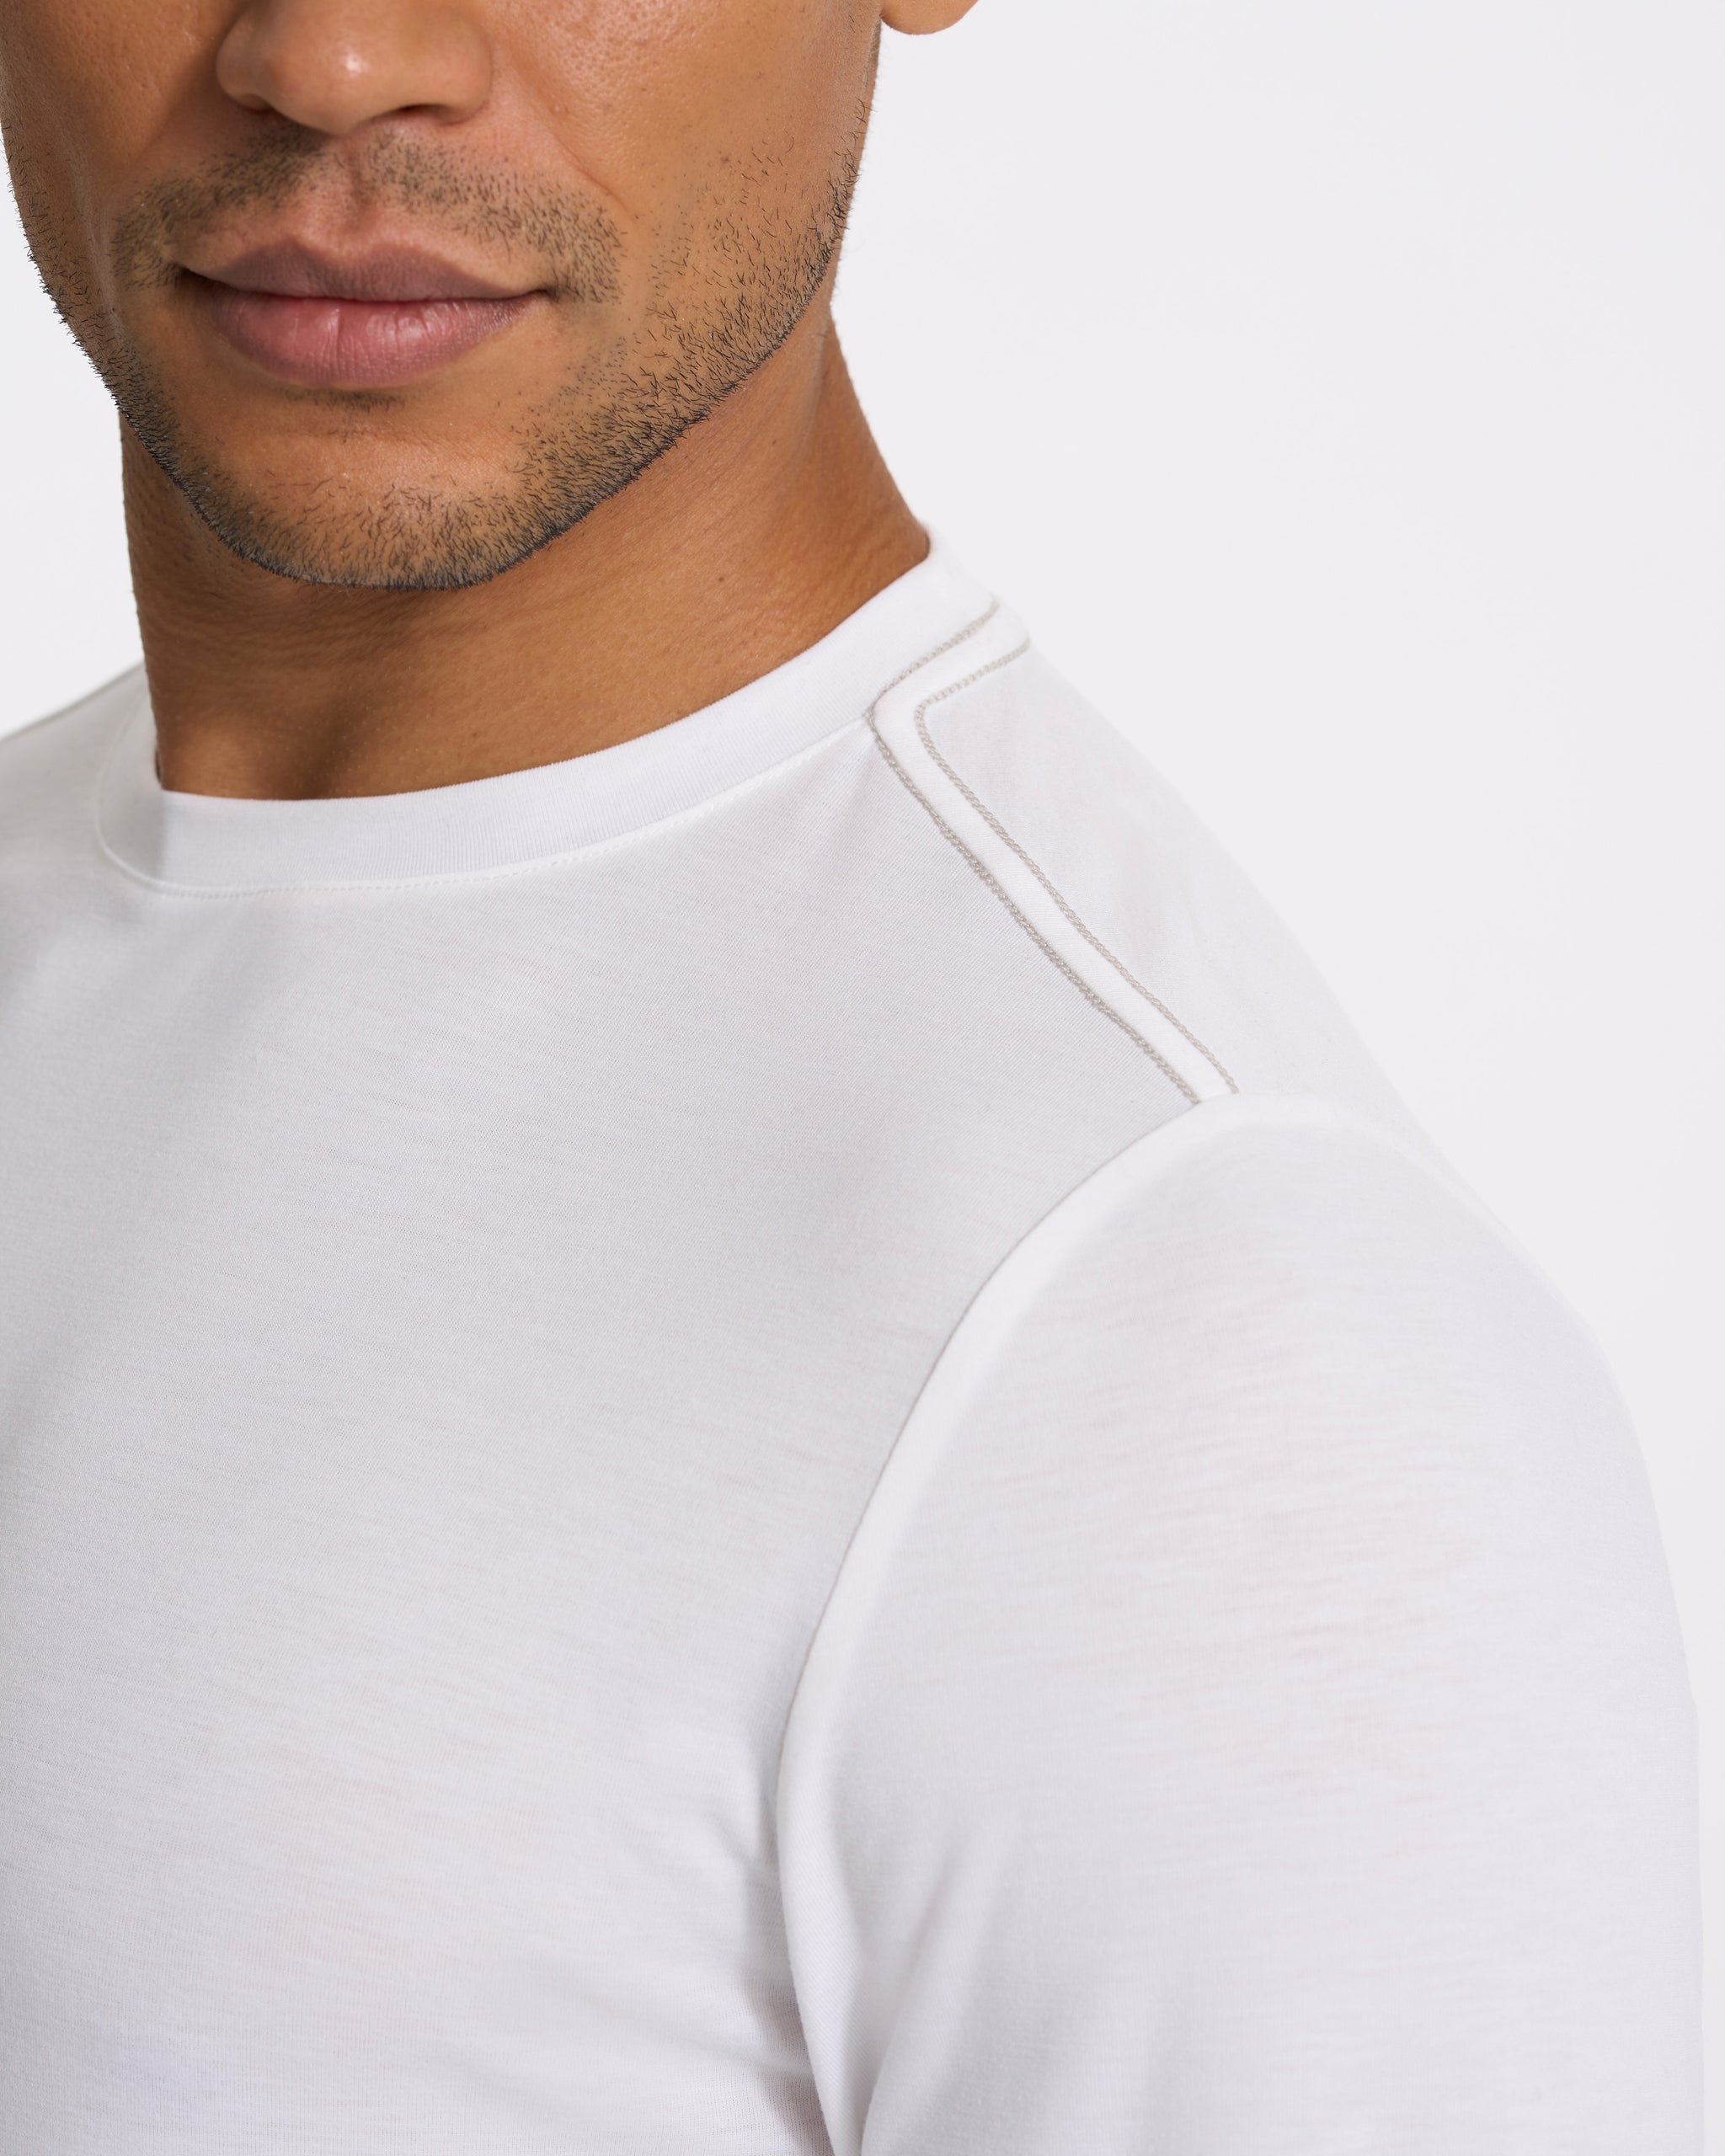 Long-Sleeve Current Tech Tee | White Tech Shirt | Vuori